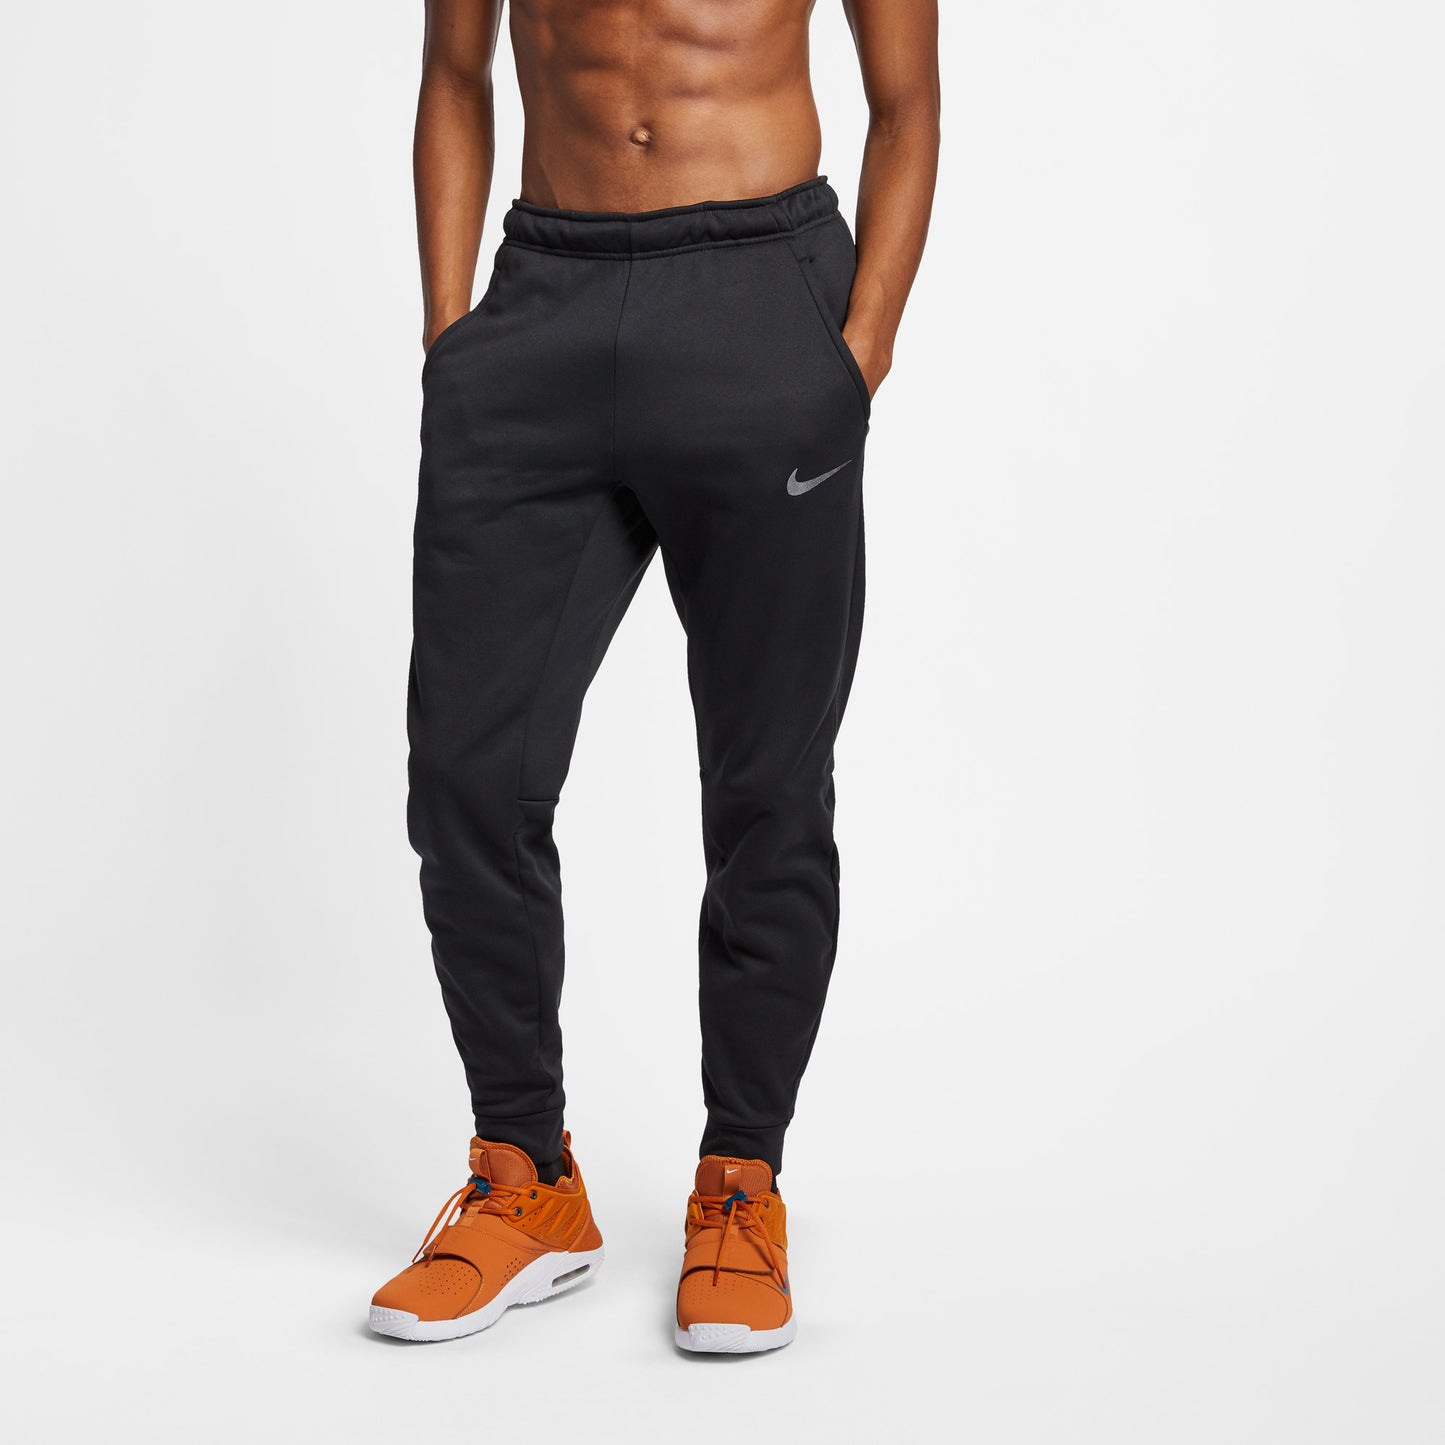 Nike Therma Men's Pants Black (1)